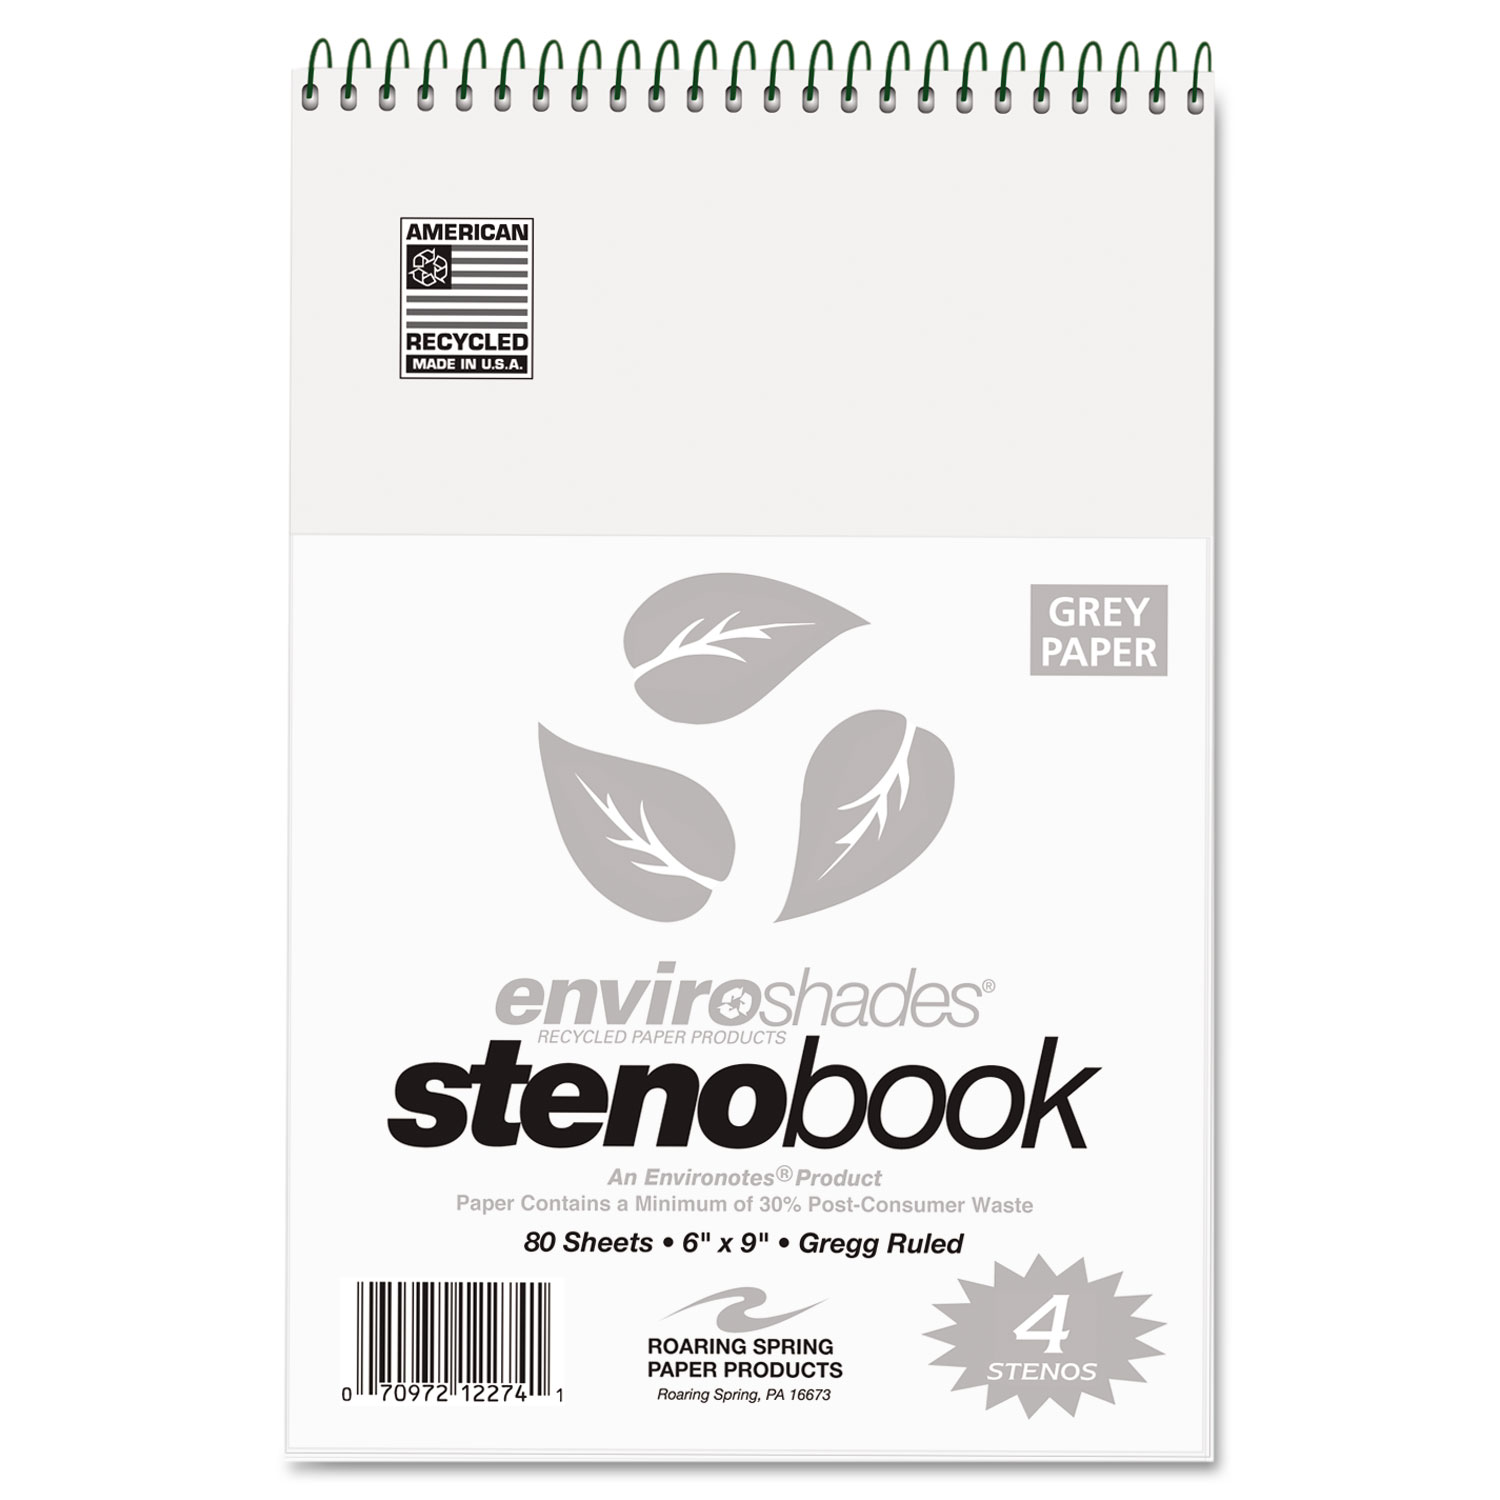 Enviroshades Steno Notebook, Gregg, 6 x 9, Gray, 80 Sheets, 4/Pack